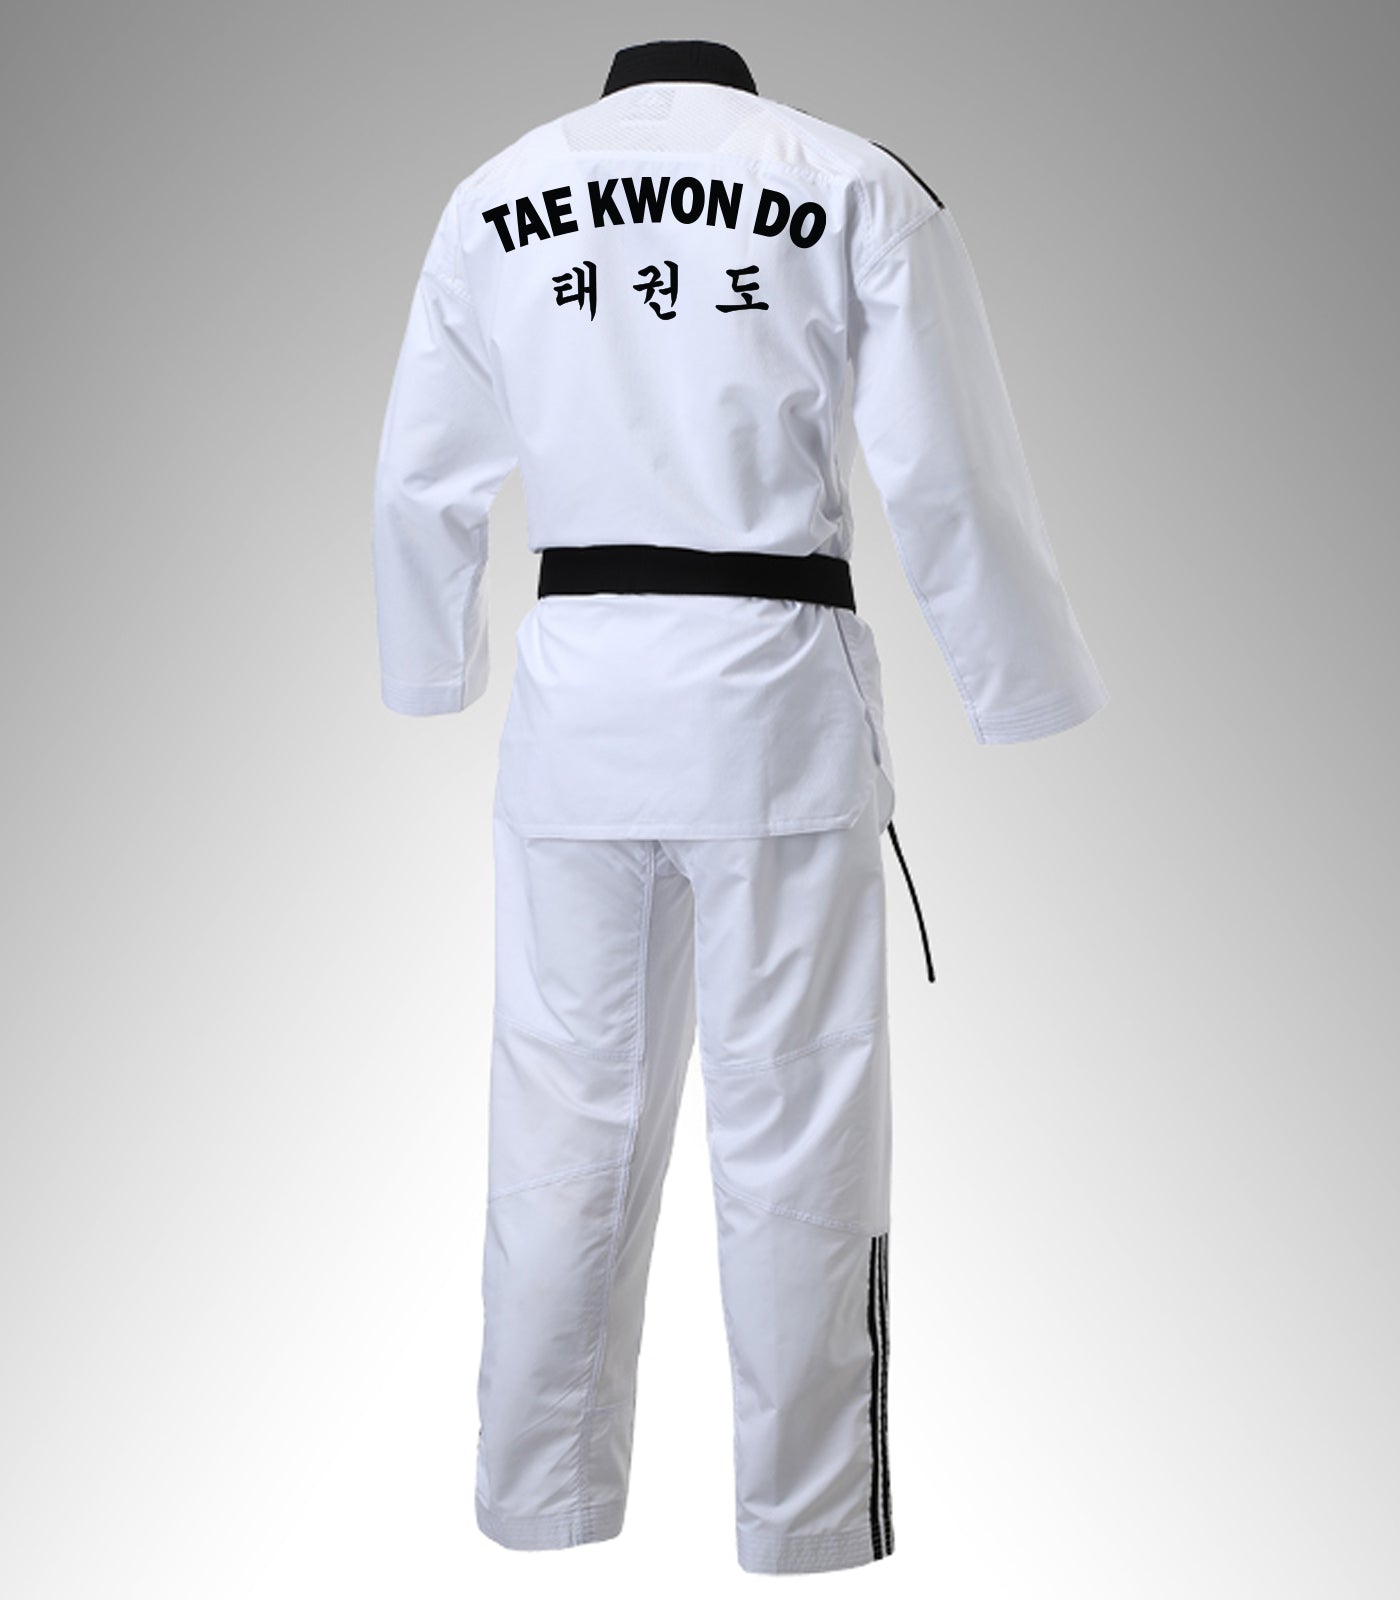 baju taekwondo adidas fighter